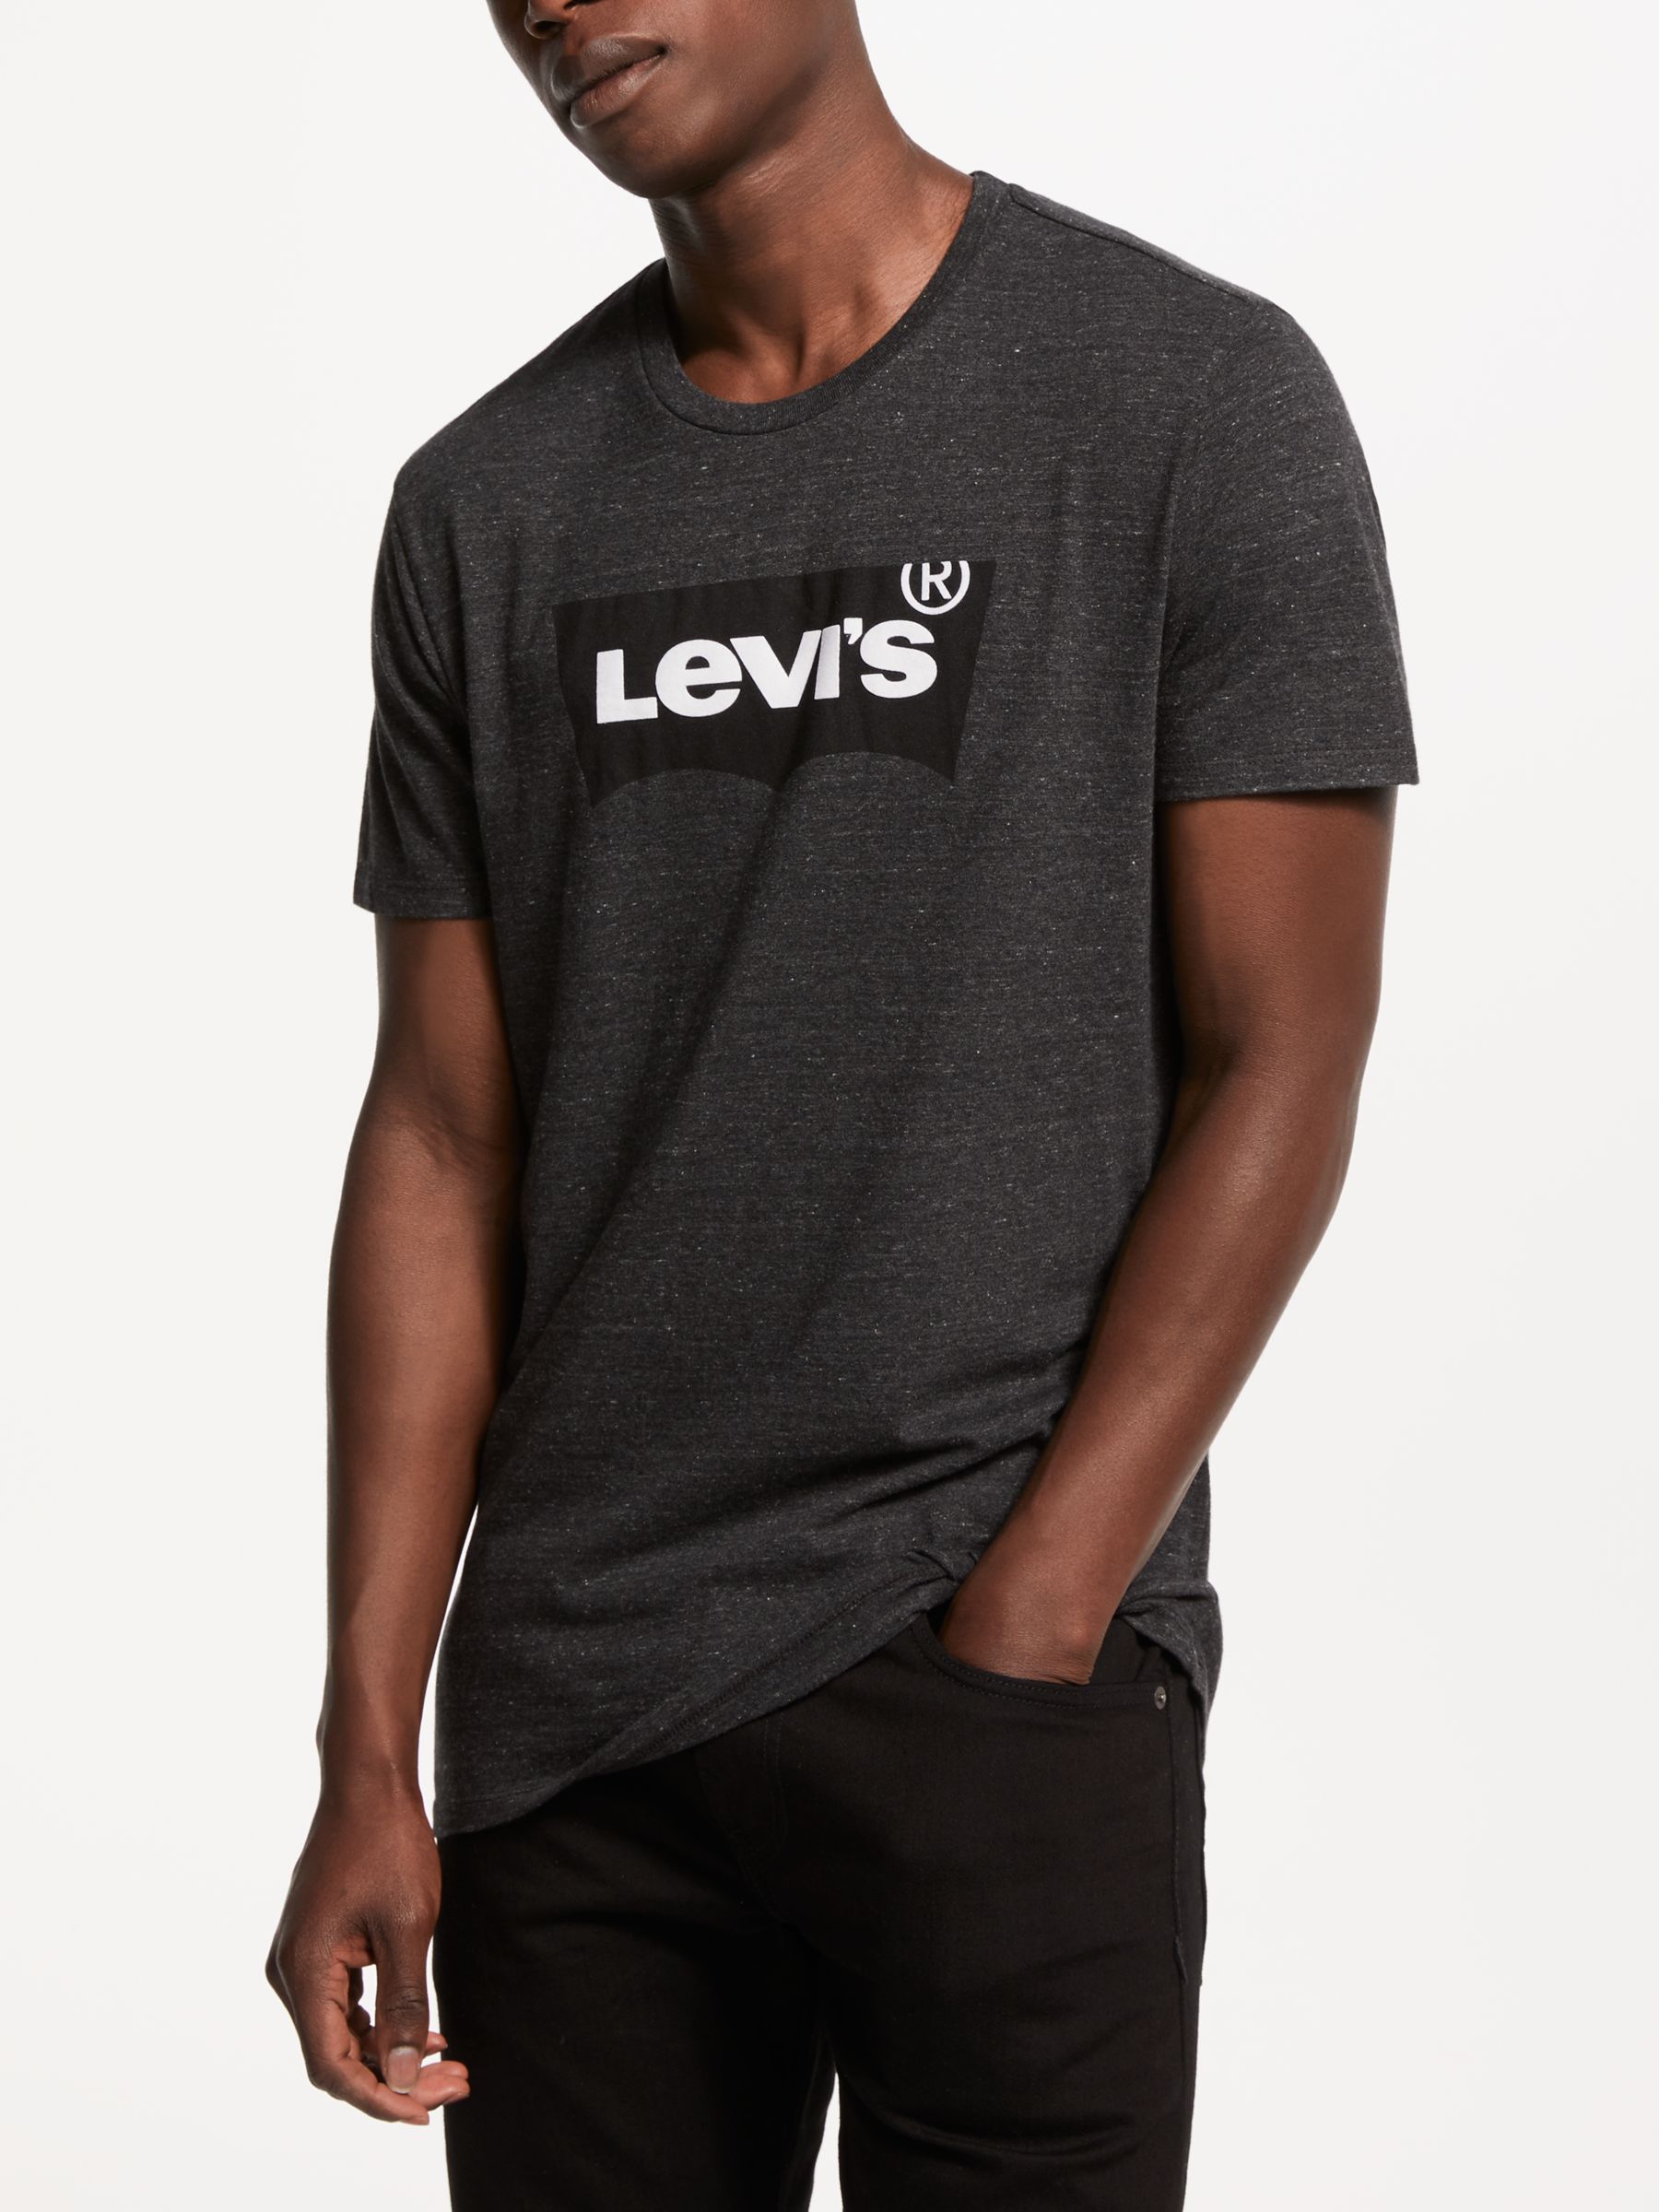 levis grey t shirt